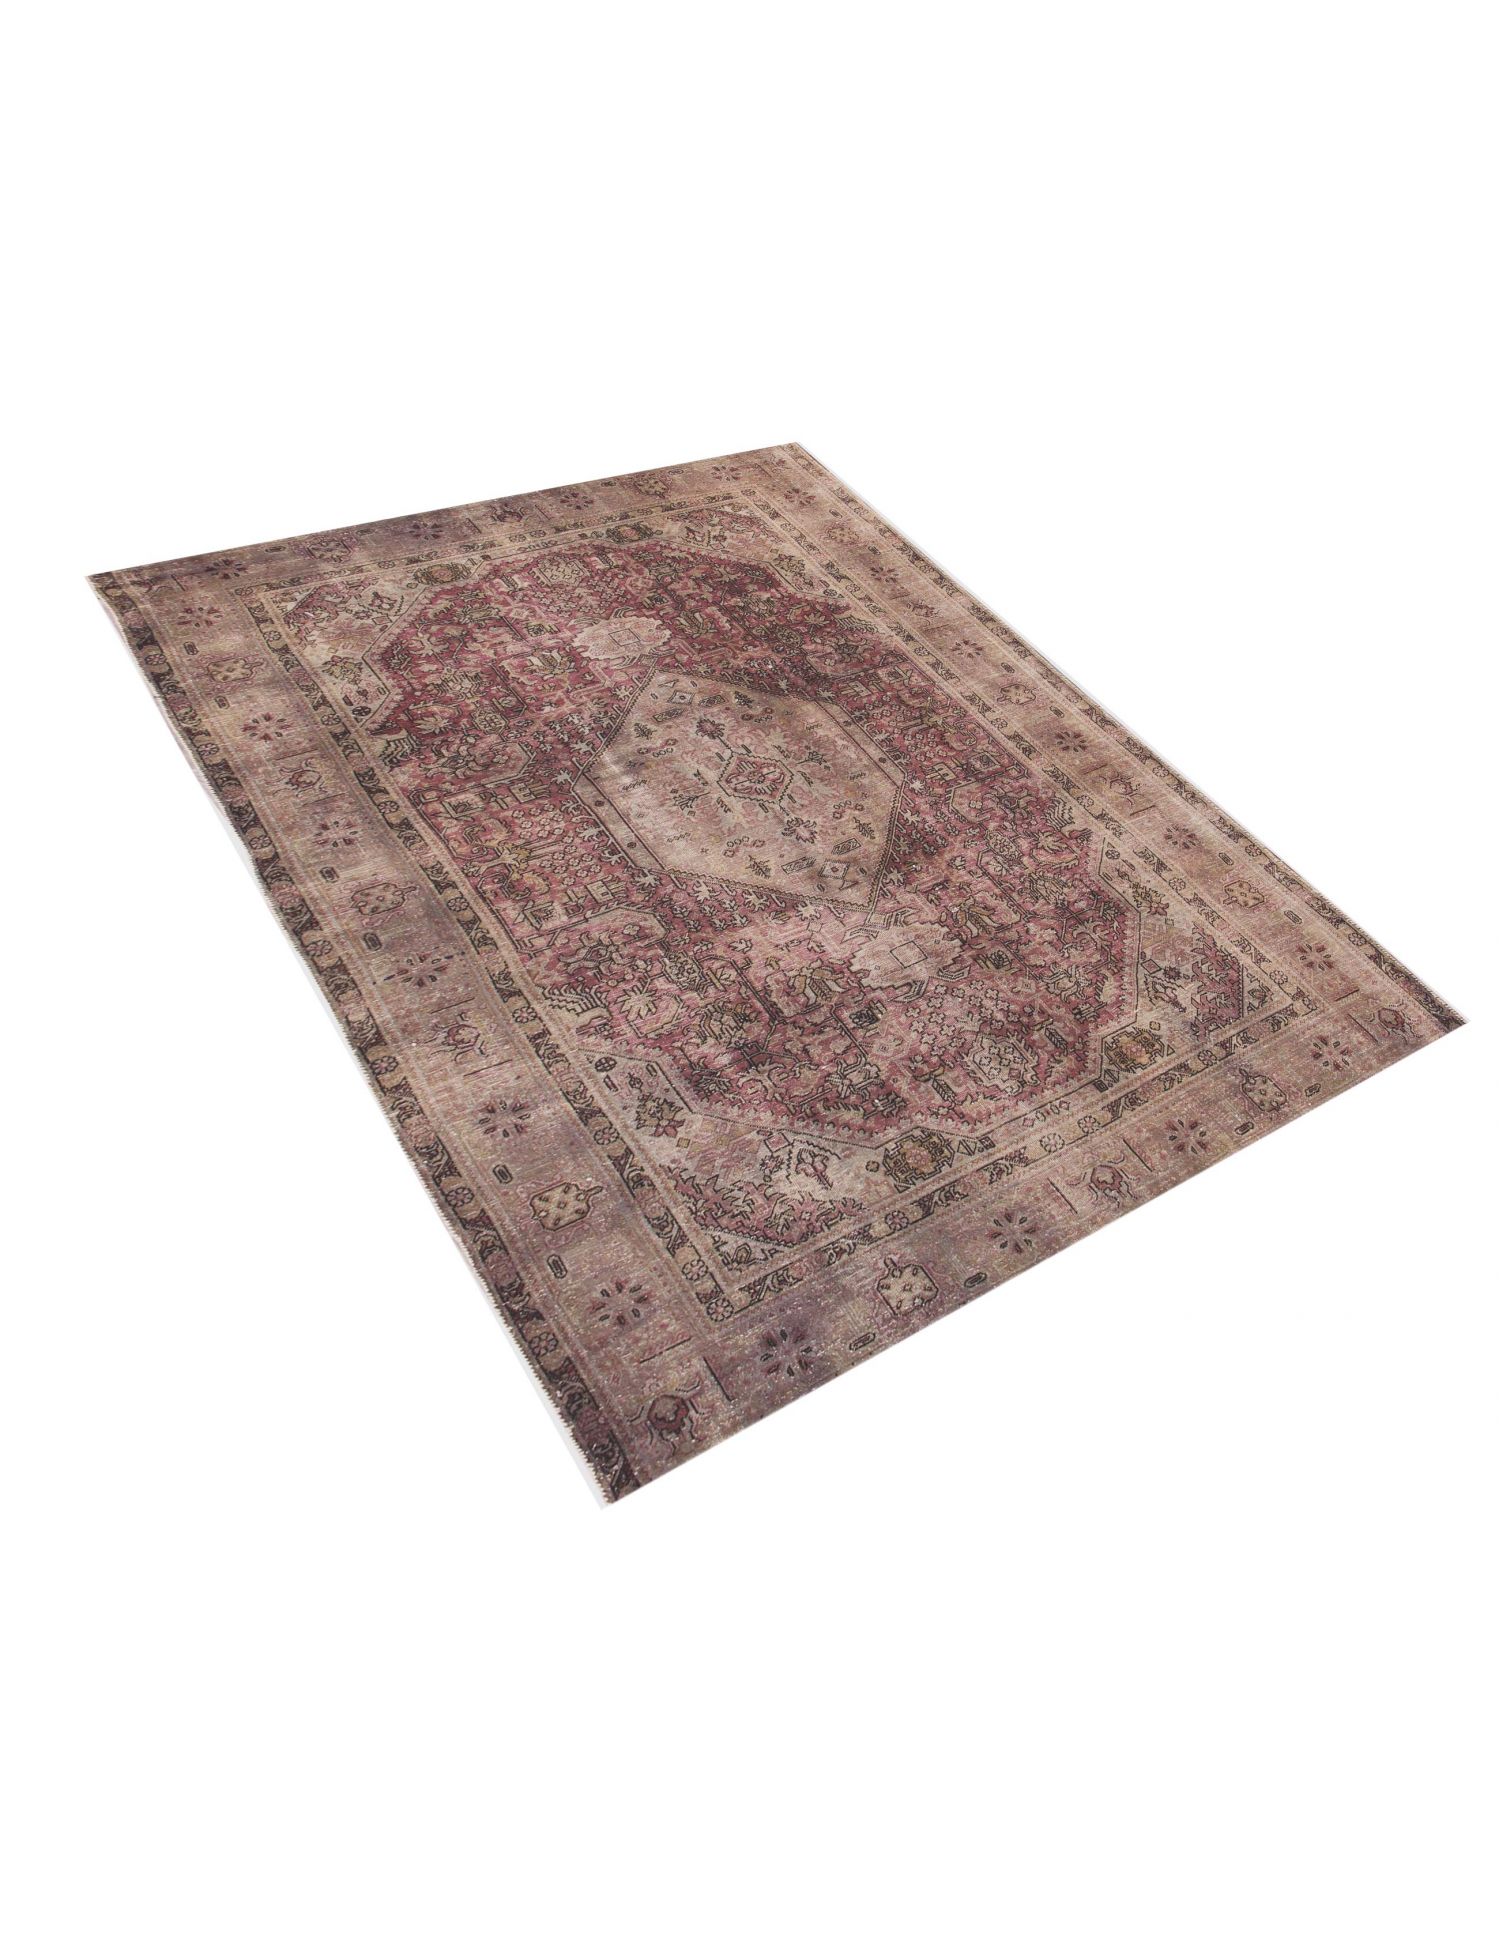 Persian Vintage Carpet  brown <br/>266 x 194 cm